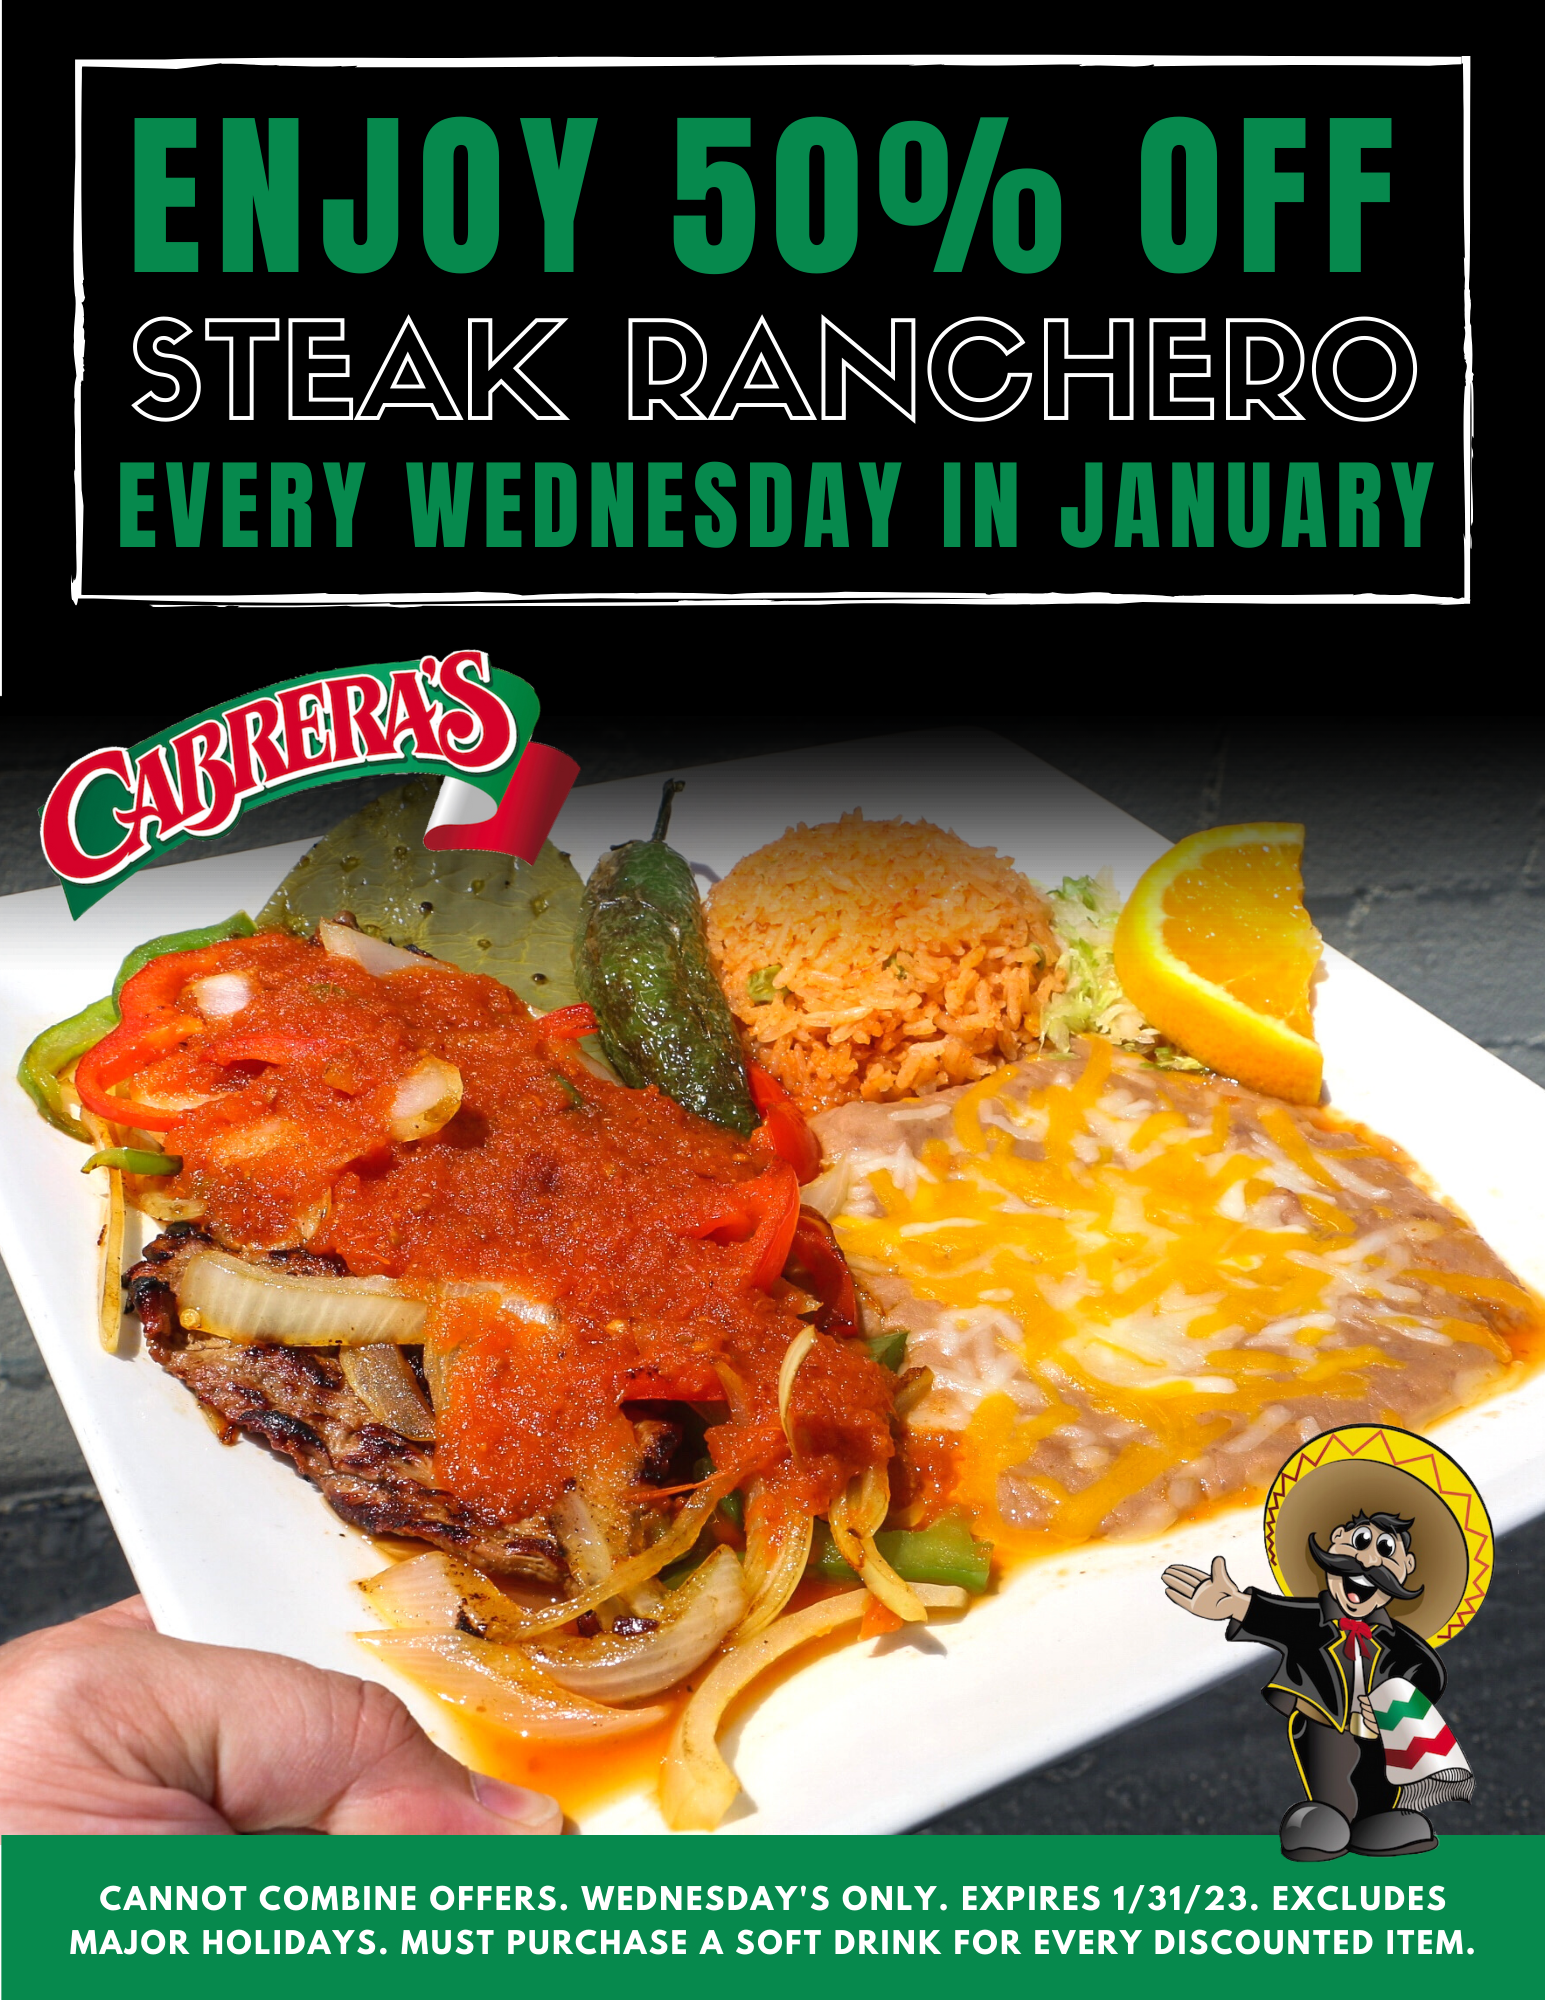 January steak ranchero deal from Cabrera's 